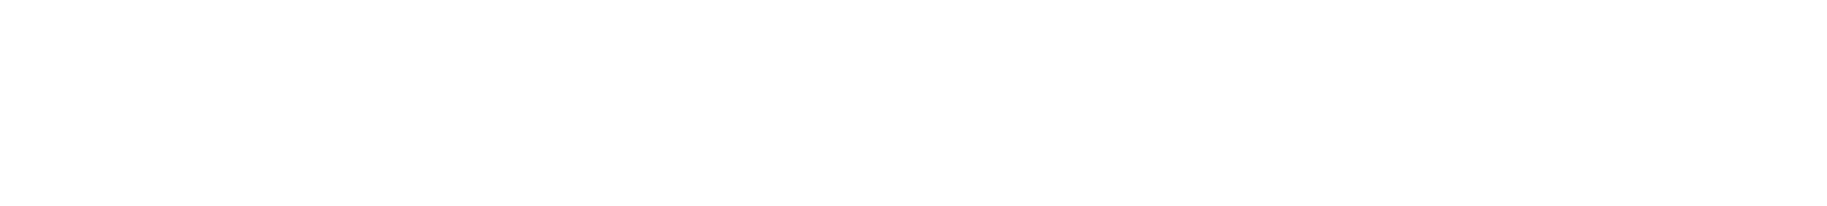 Cross River Logo - Cross River Rail Recruitment - Kingston Human Capital